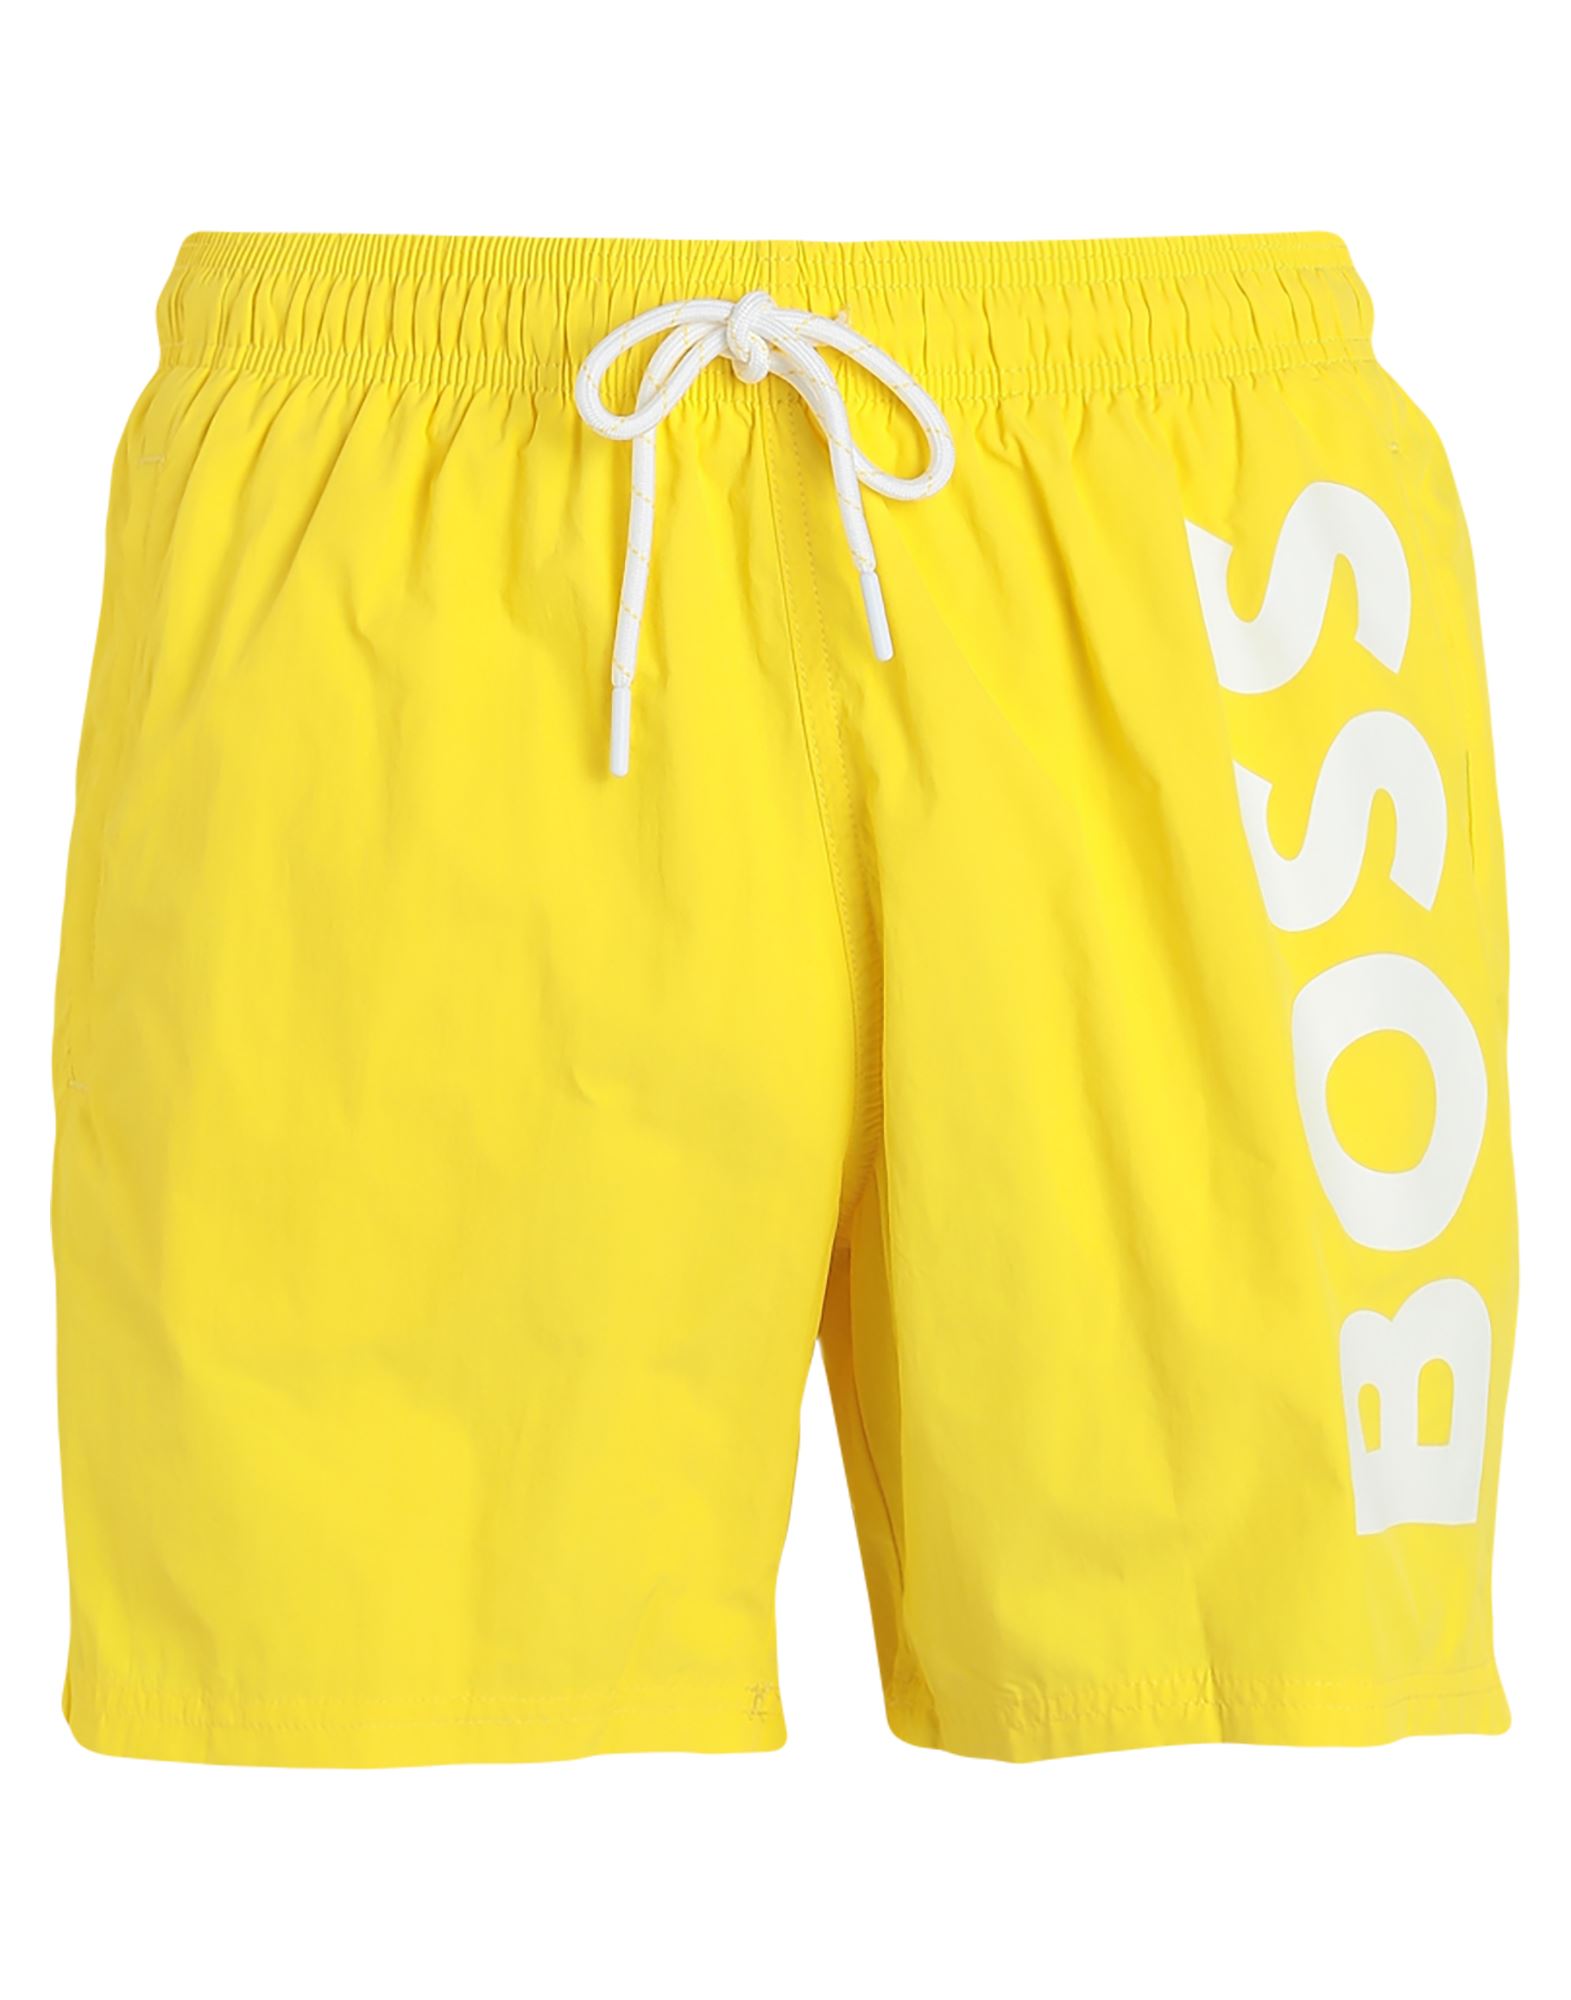 Hugo Boss Swim Trunks In Yellow